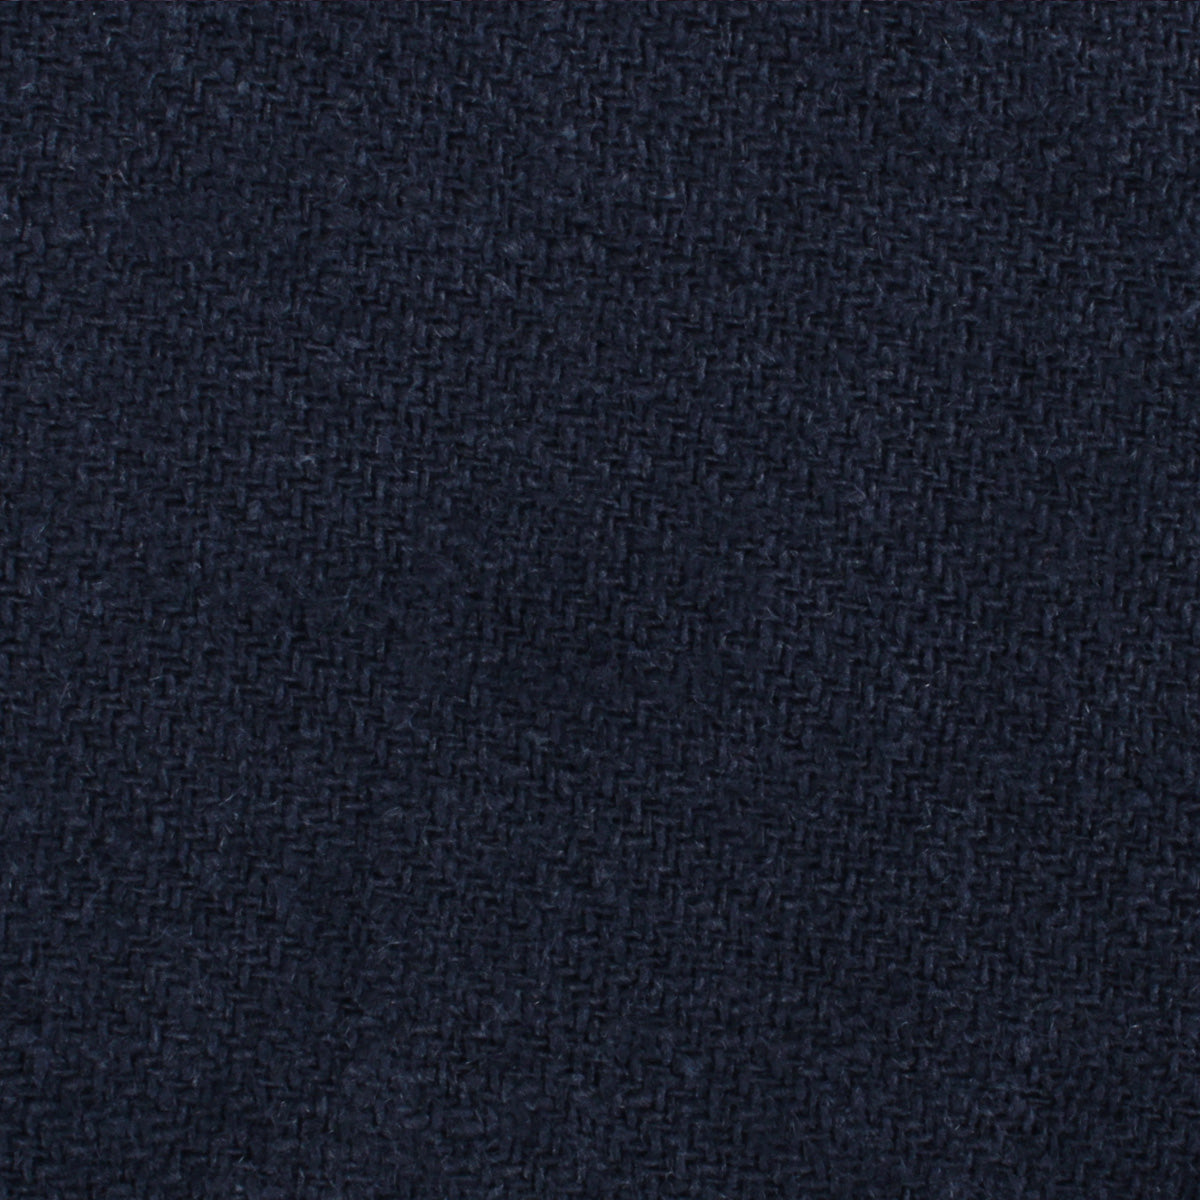 Midnight Blue-Black Linen Self Bow Tie Fabric